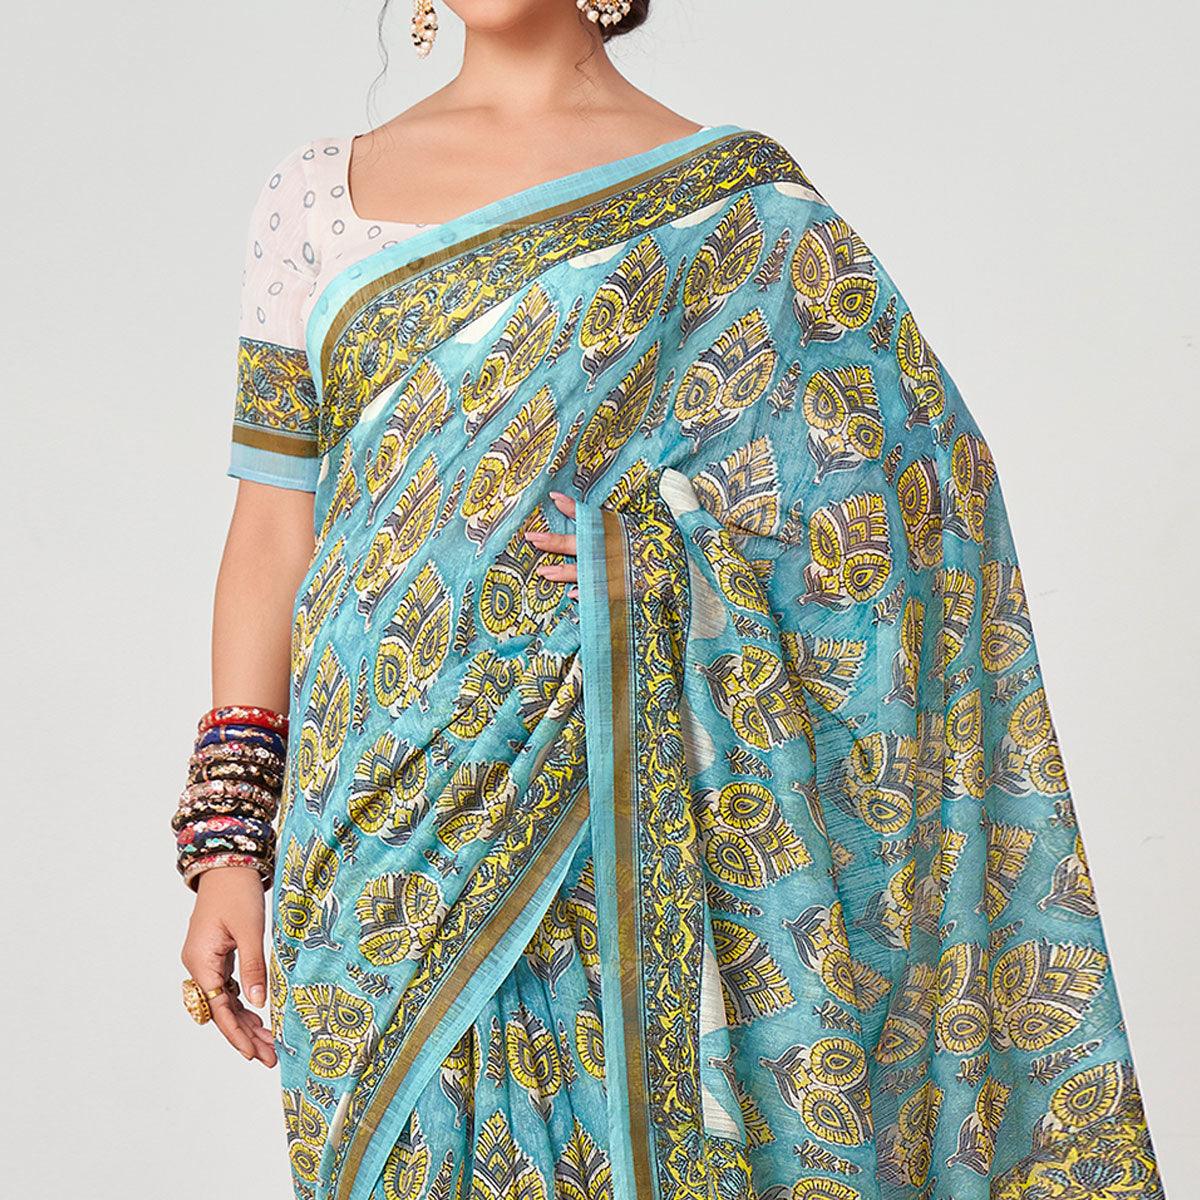 Blue Floral Printed Chanderi Saree - Peachmode